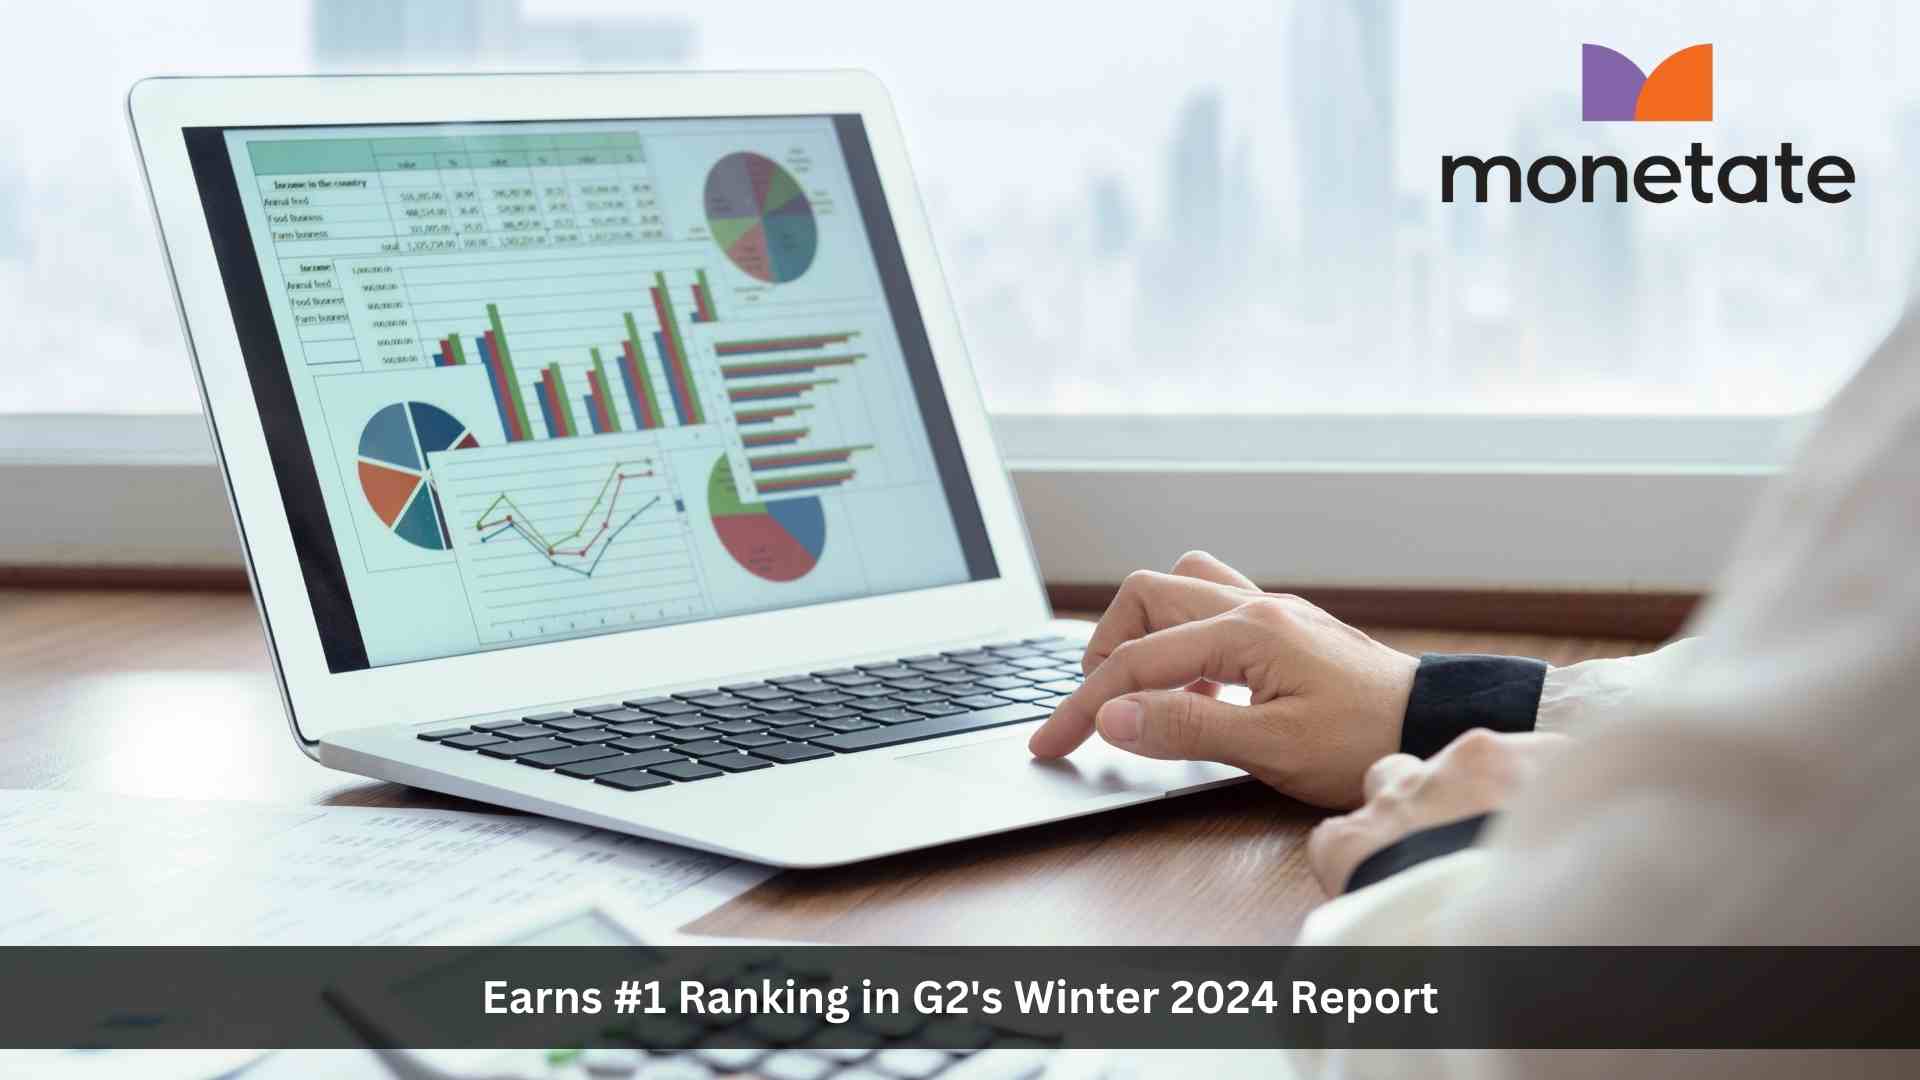 Monetate Earns #1 Ranking in G2's Winter 2024 Report